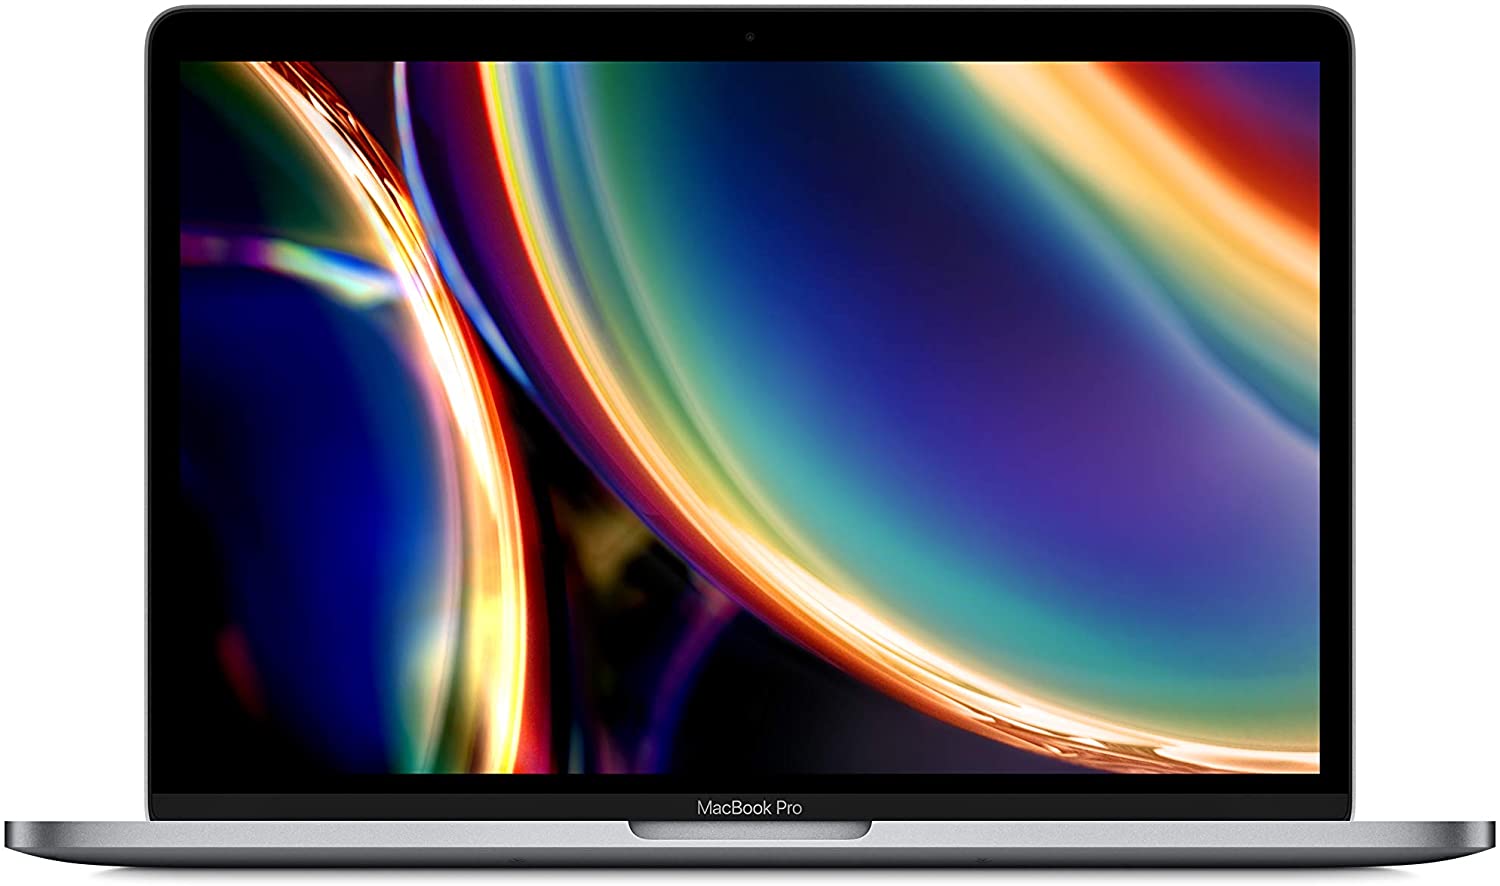 Intel 版 13インチMacBook Pro(Core i5/8GB RAM/256GB)が特価109,800円で販売中